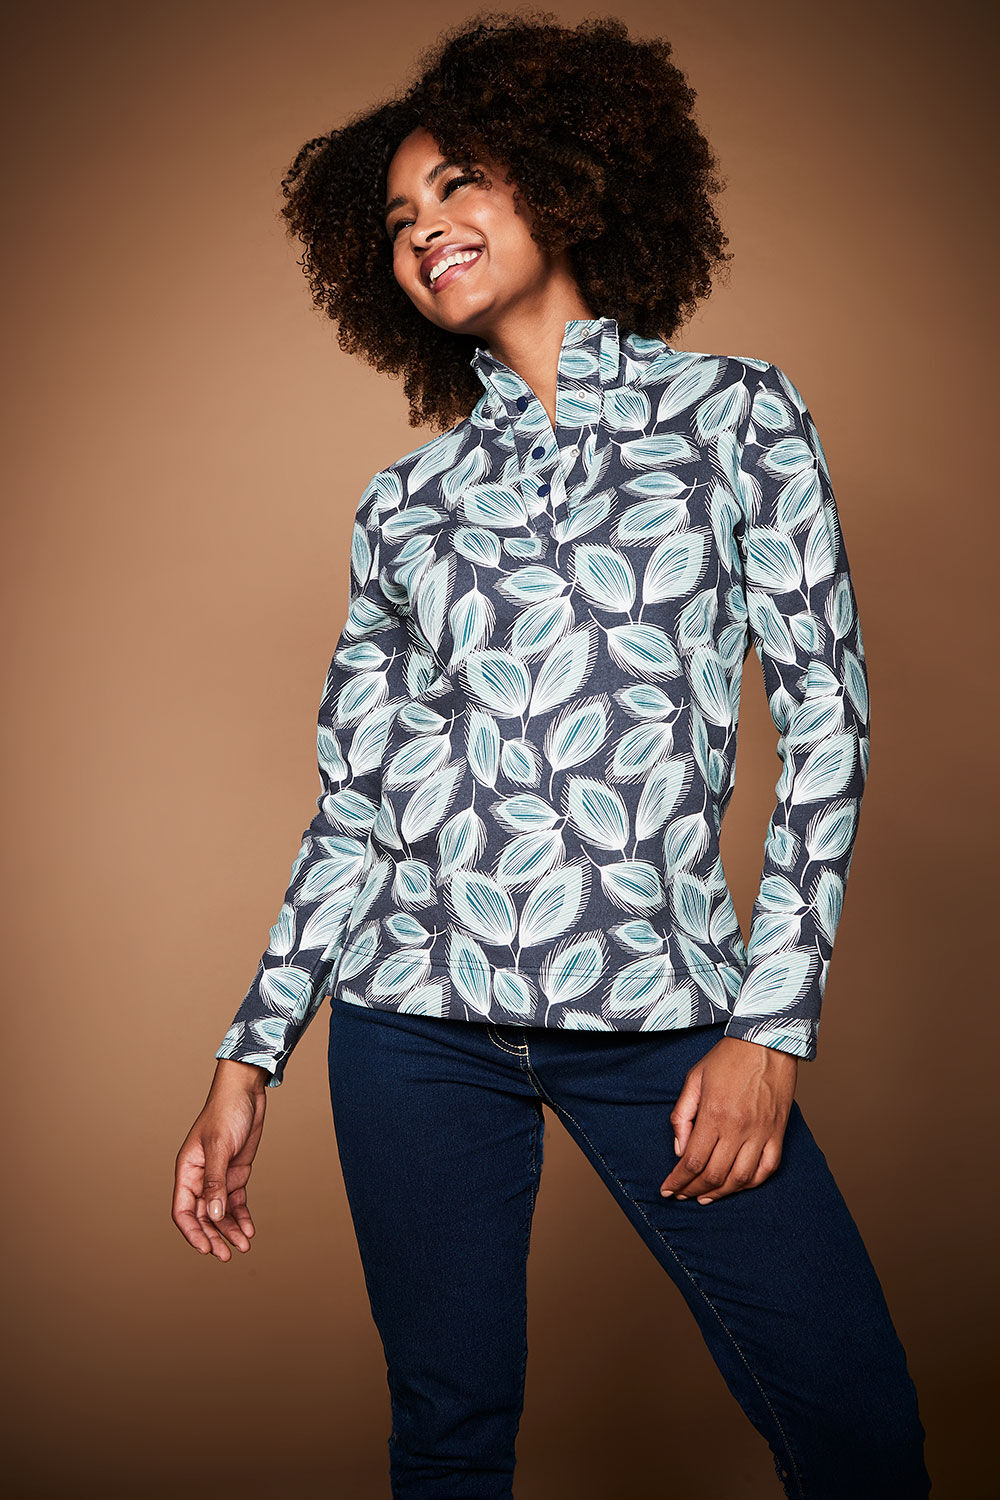 Bonmarche Women’s Navy Blue and White Cotton Leaf Print Long Sleeve Funnel Neck Sweatshirt, Size: 14